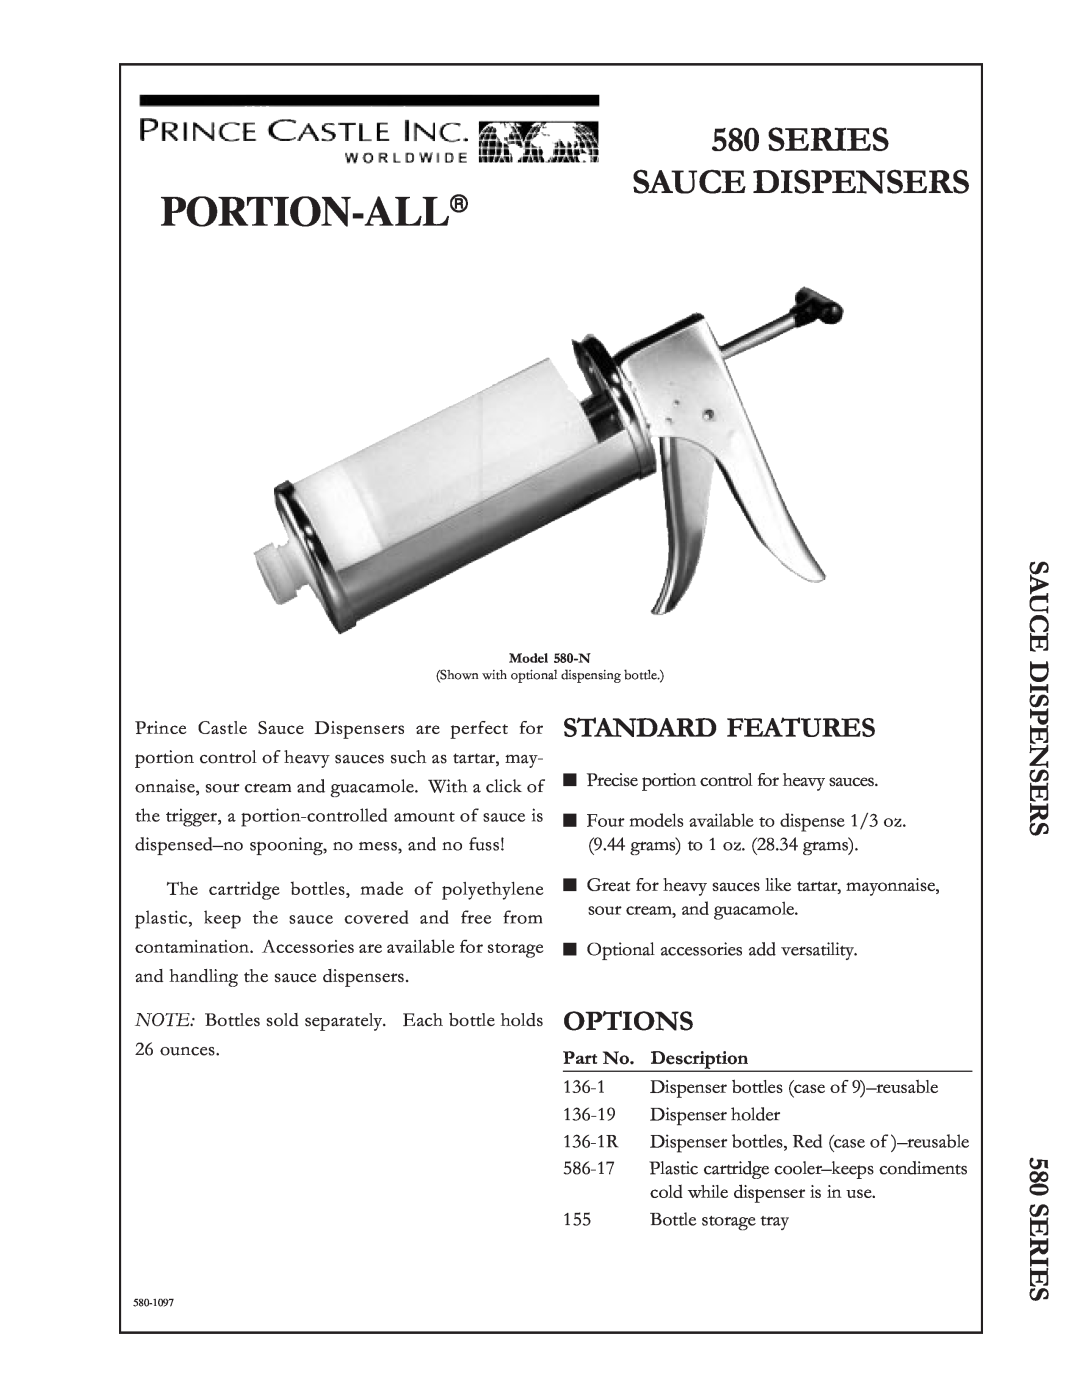 Prince Castle 580 Series manual Series Sauce Dispensers, Standard Features, PORTION-ALLâ 